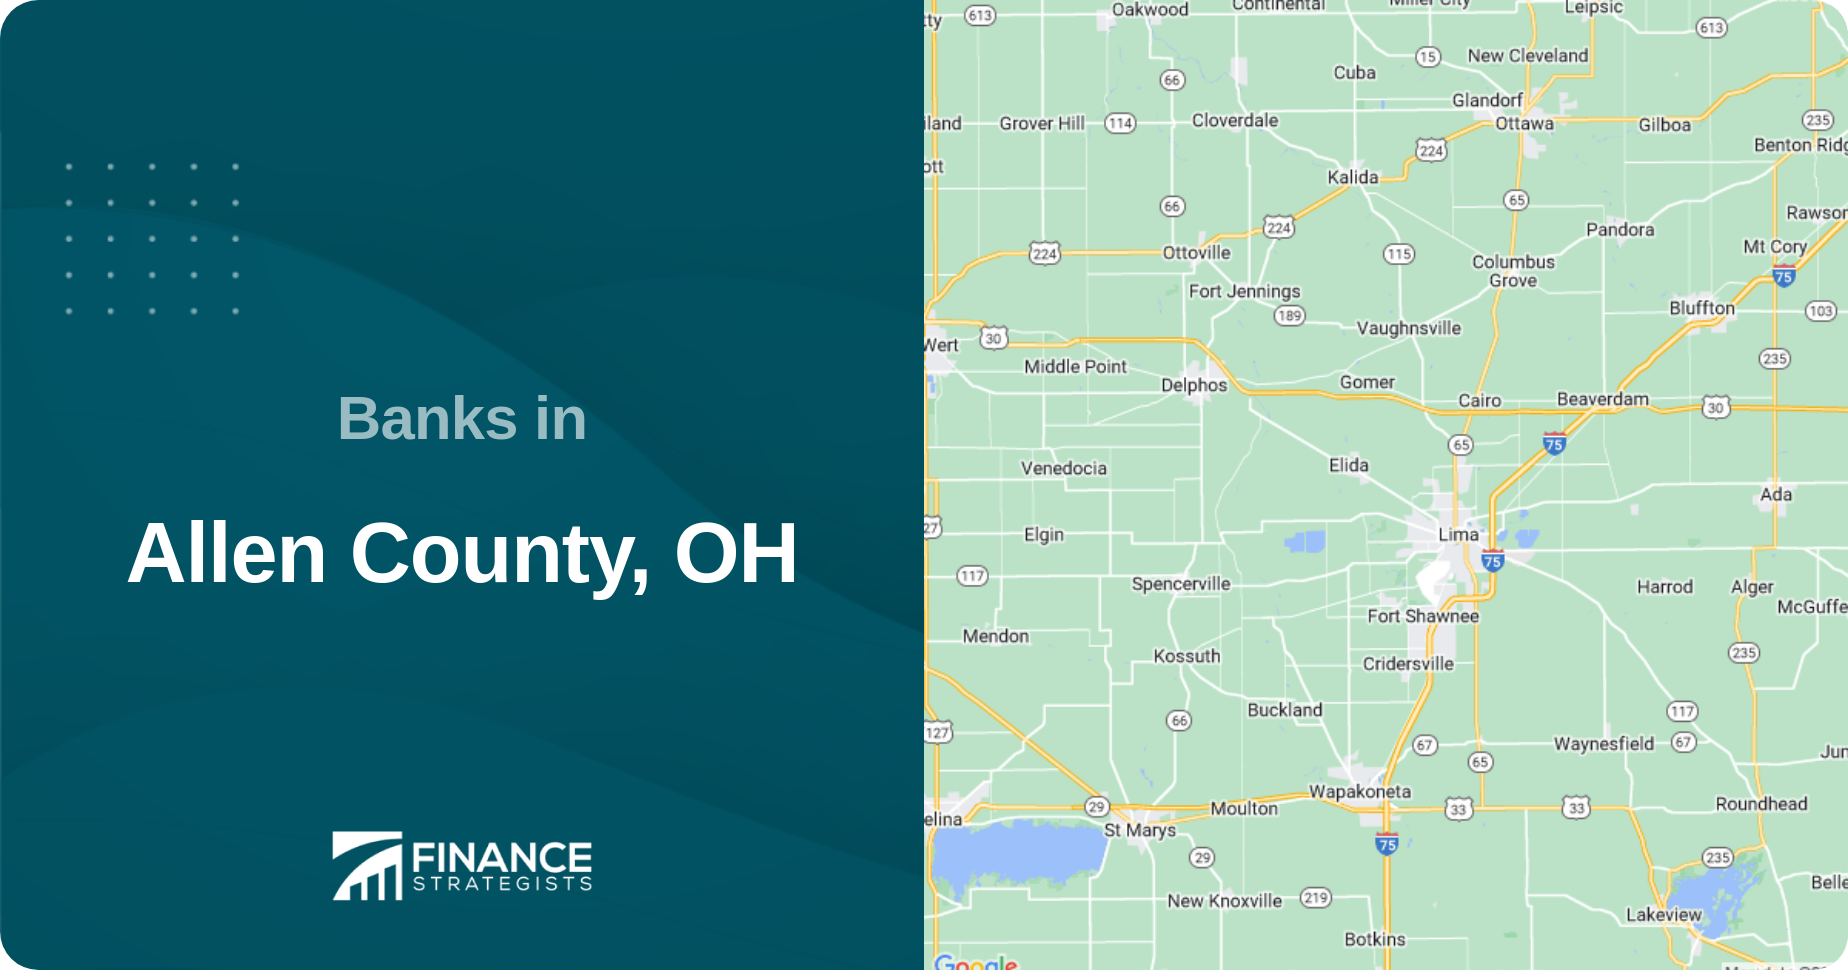 Banks in Allen County, OH